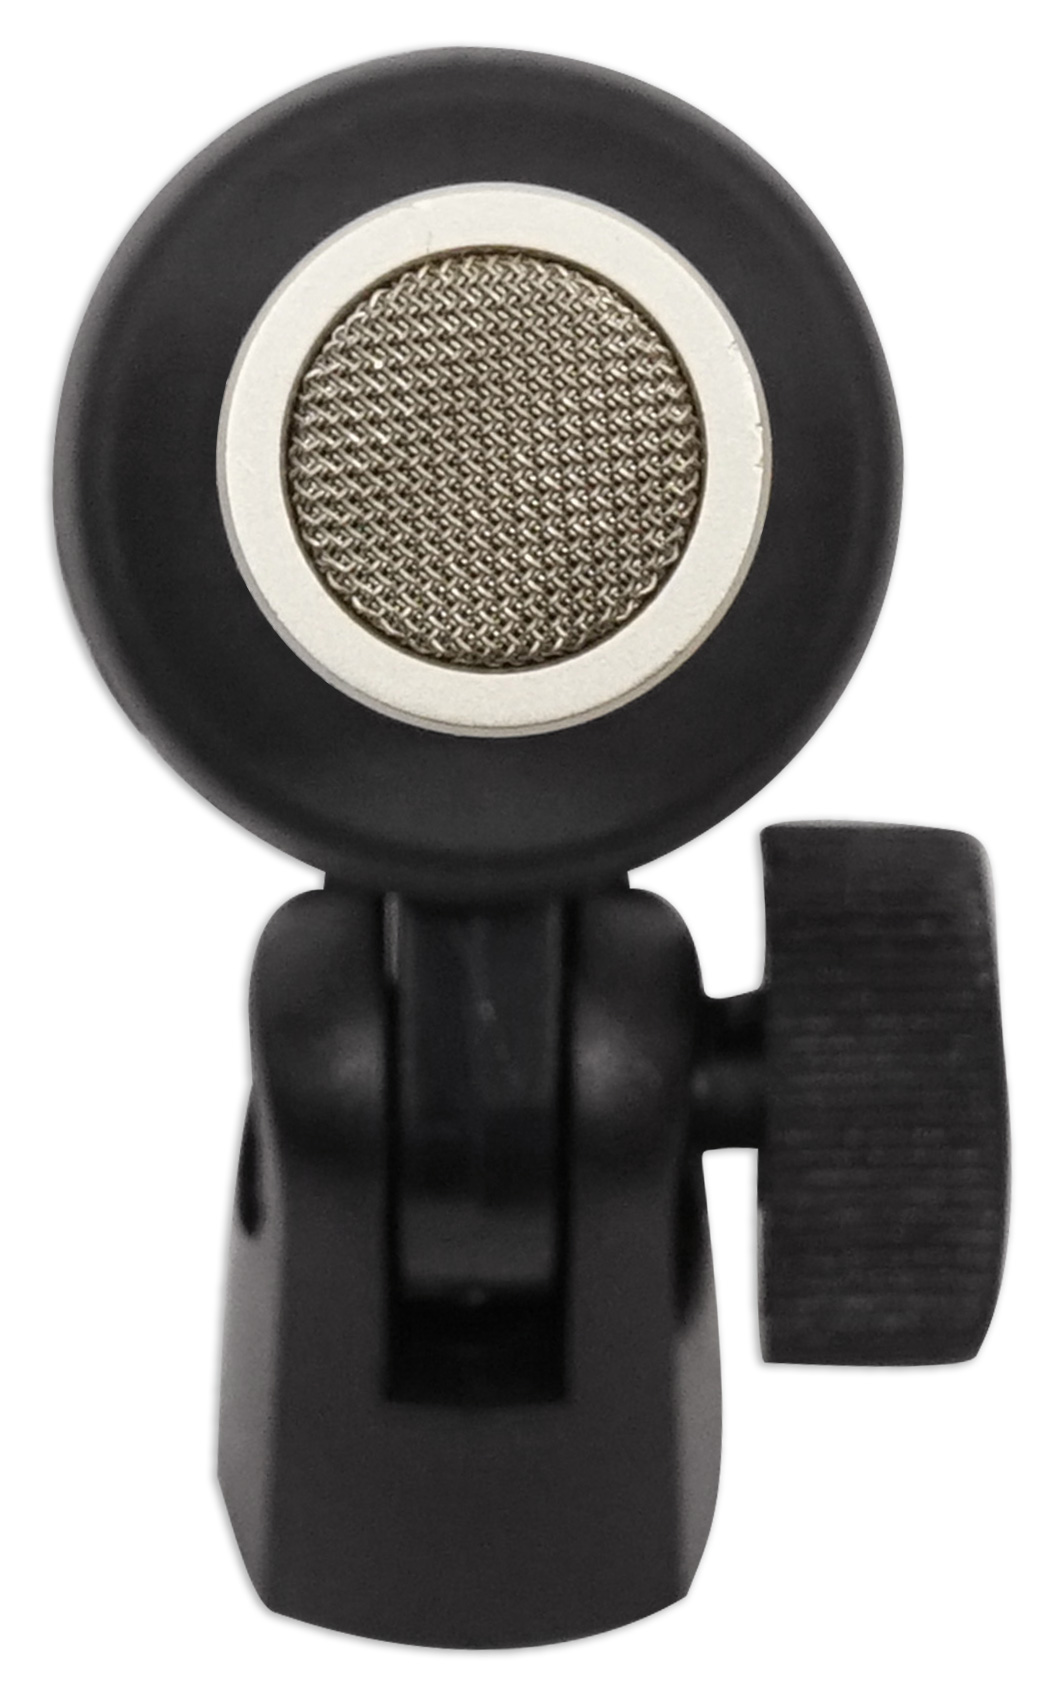 samson c15 cl studio condenser microphone